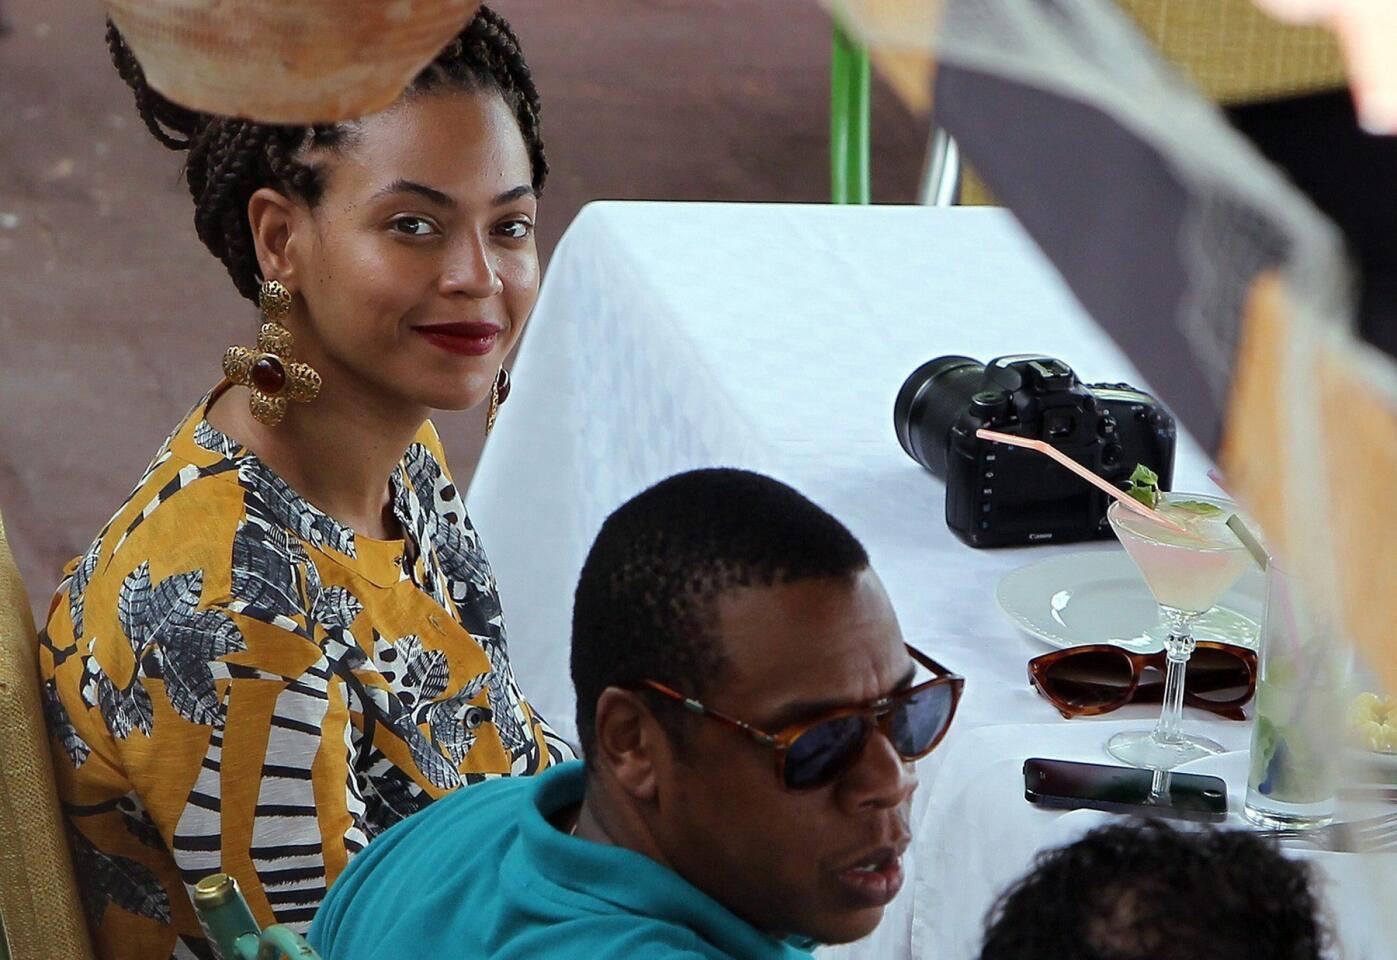 Beyoncé and her husband, rapper Jay-Z